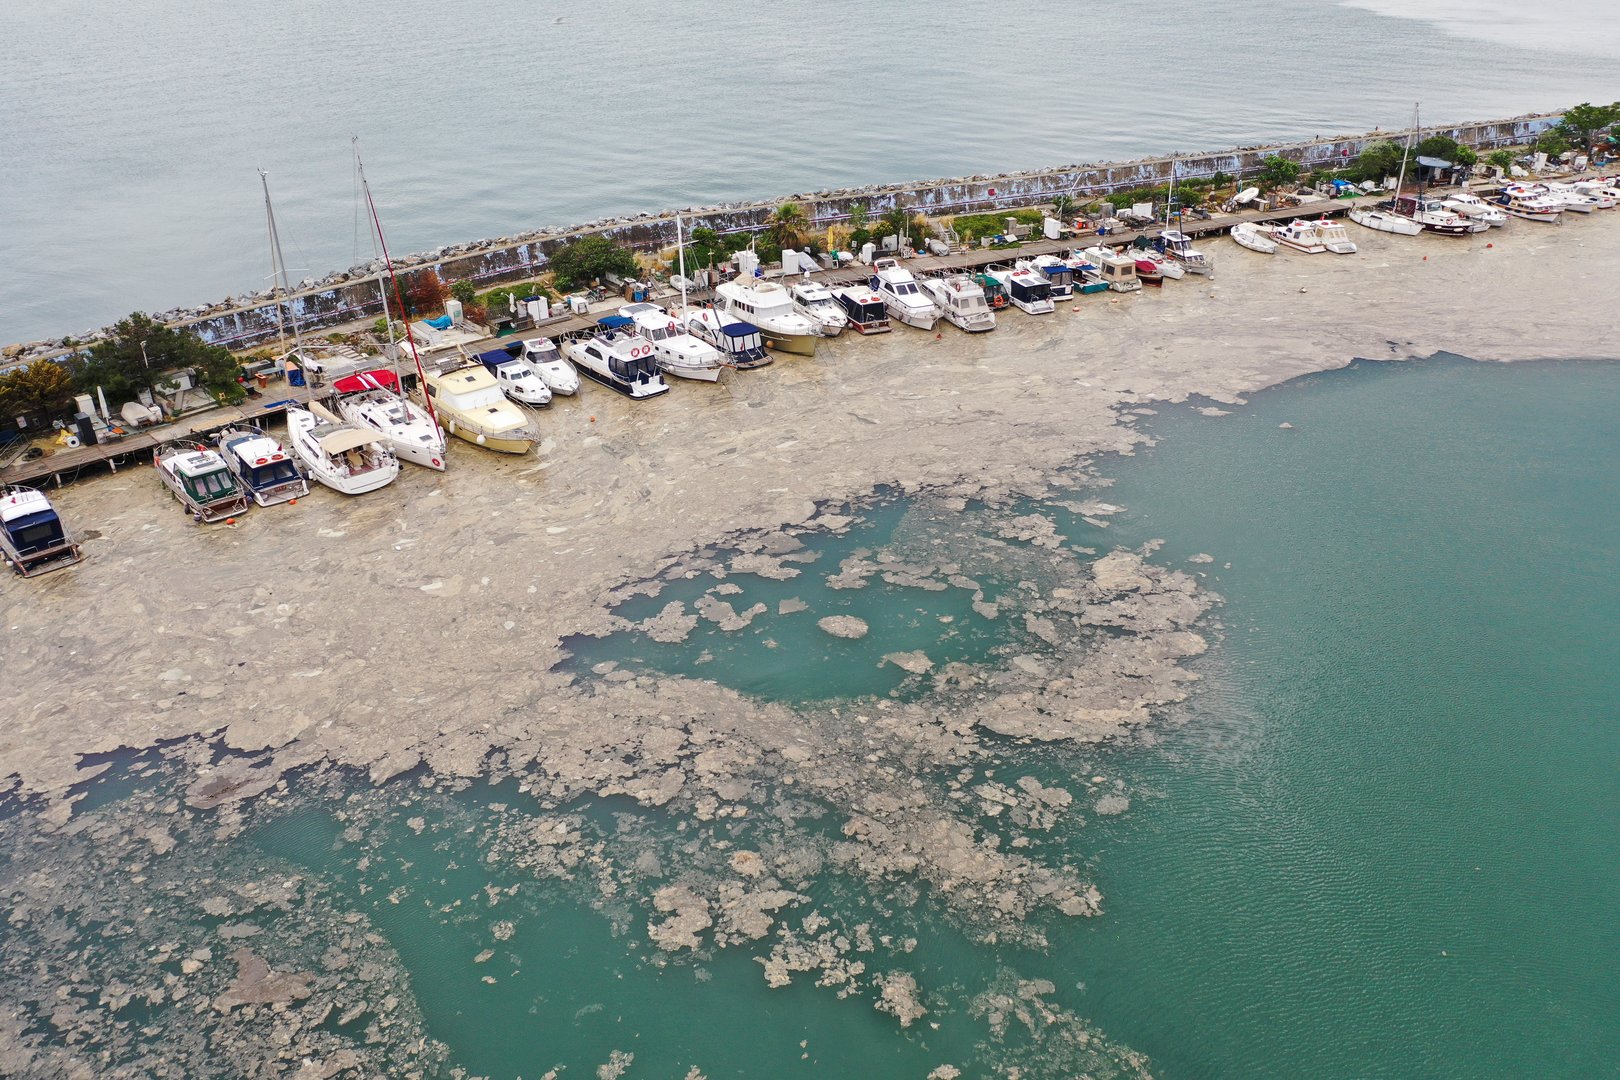 image &#8216;Sea snot&#8217; outbreak off Turkish coast poses threat to marine life